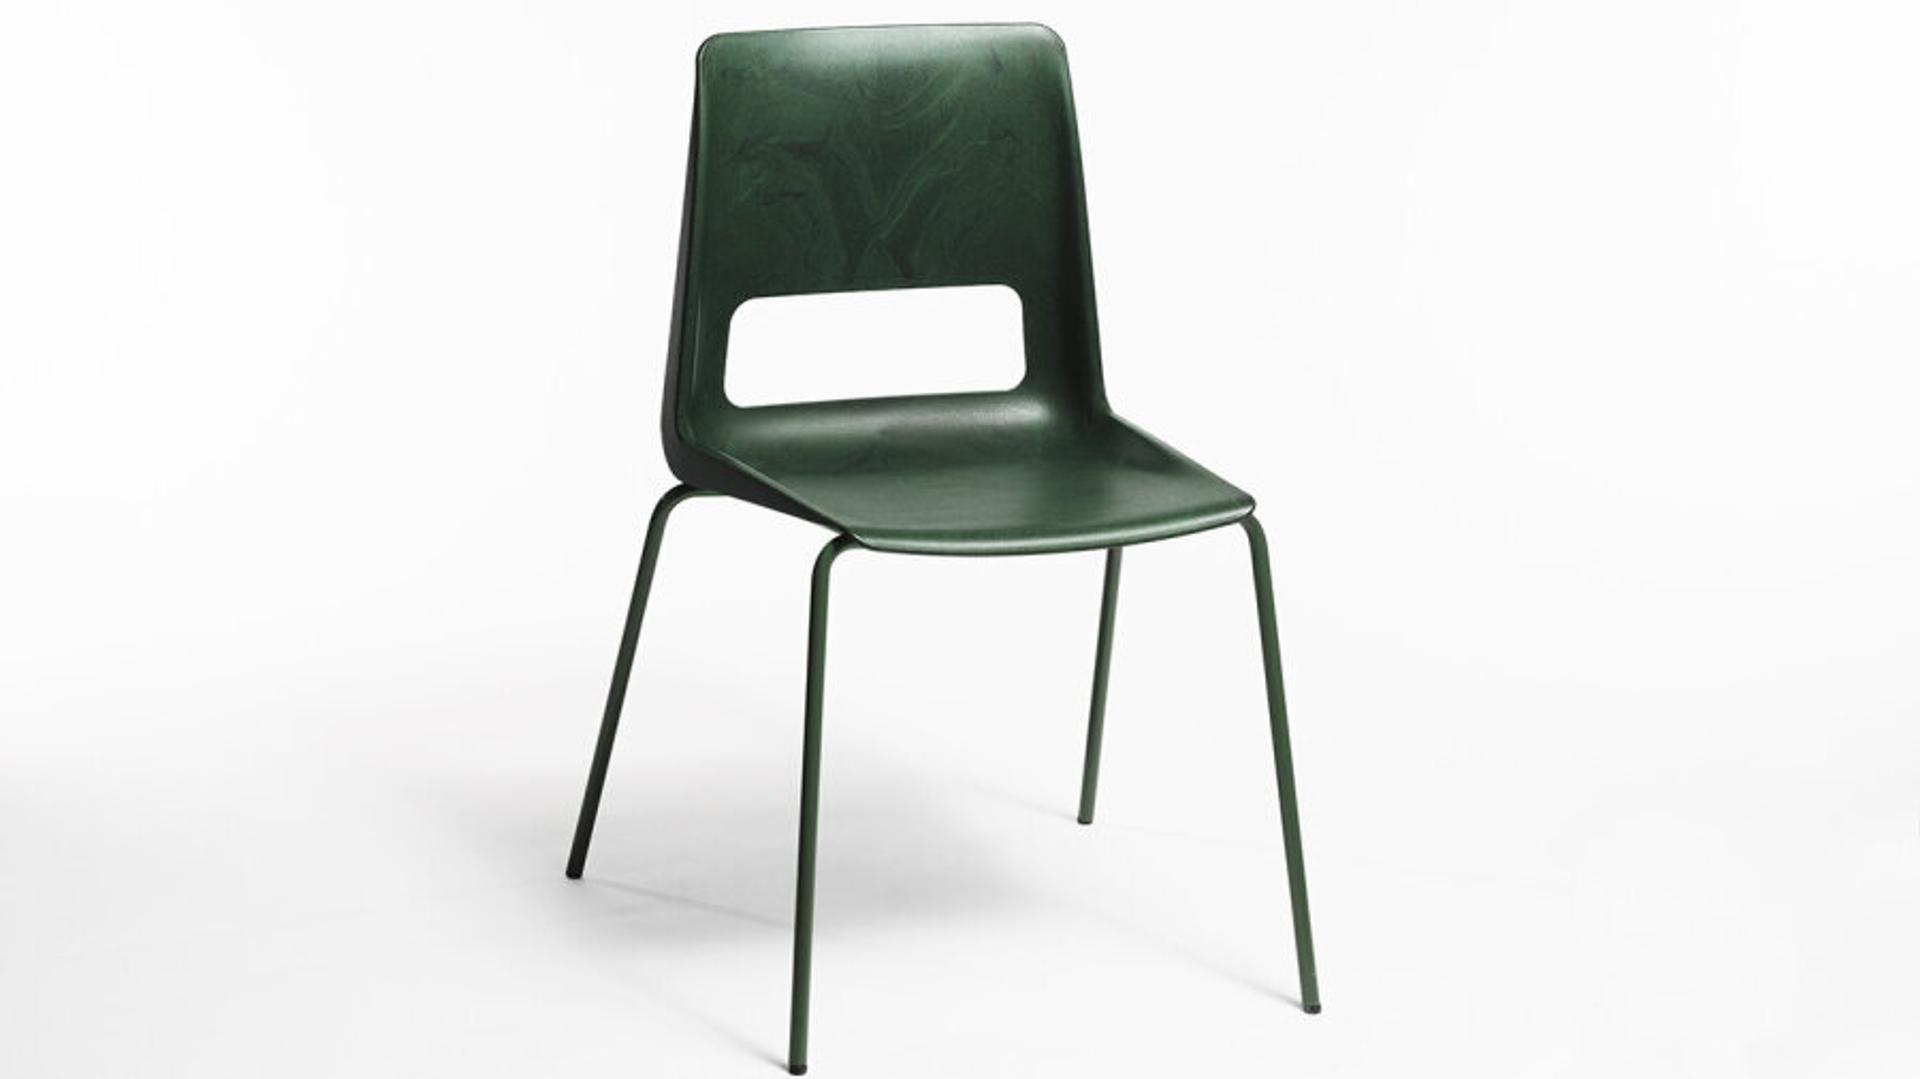 Green plastic chair